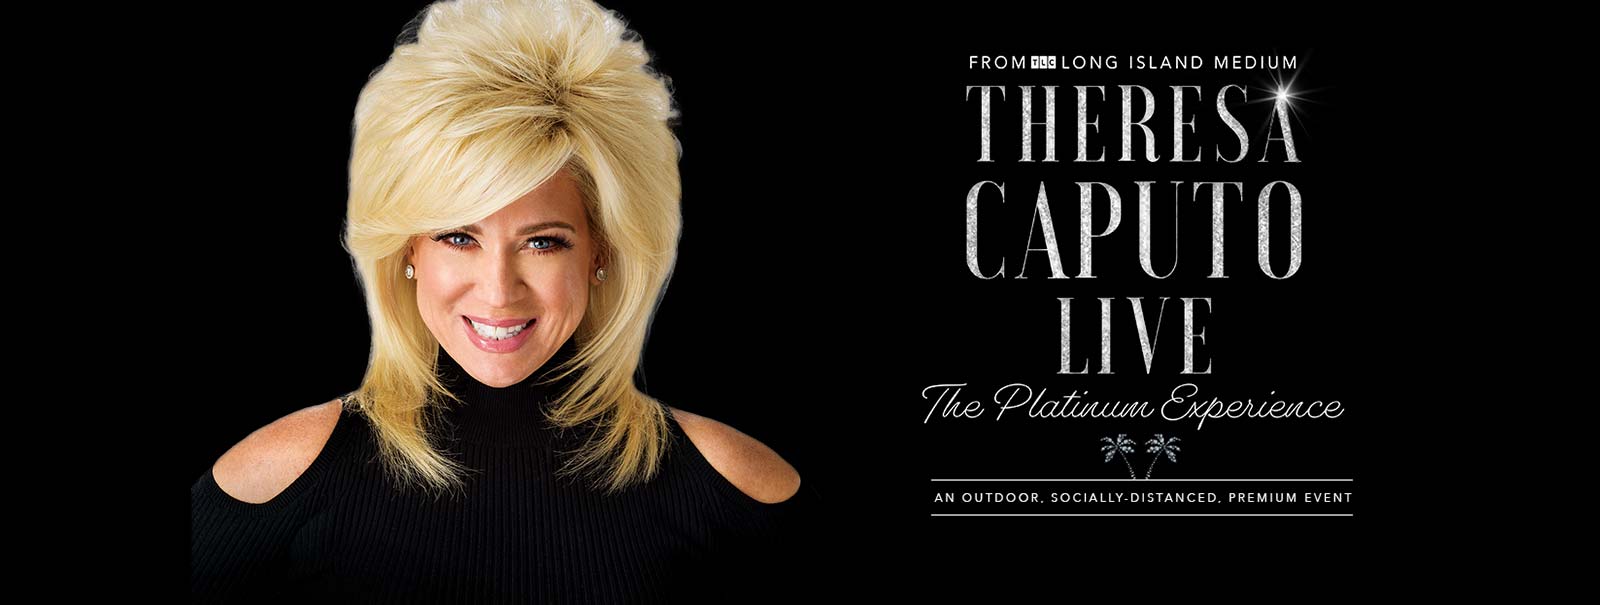 Theresa Caputo Live: The Platinum Experience | Broward Center for the